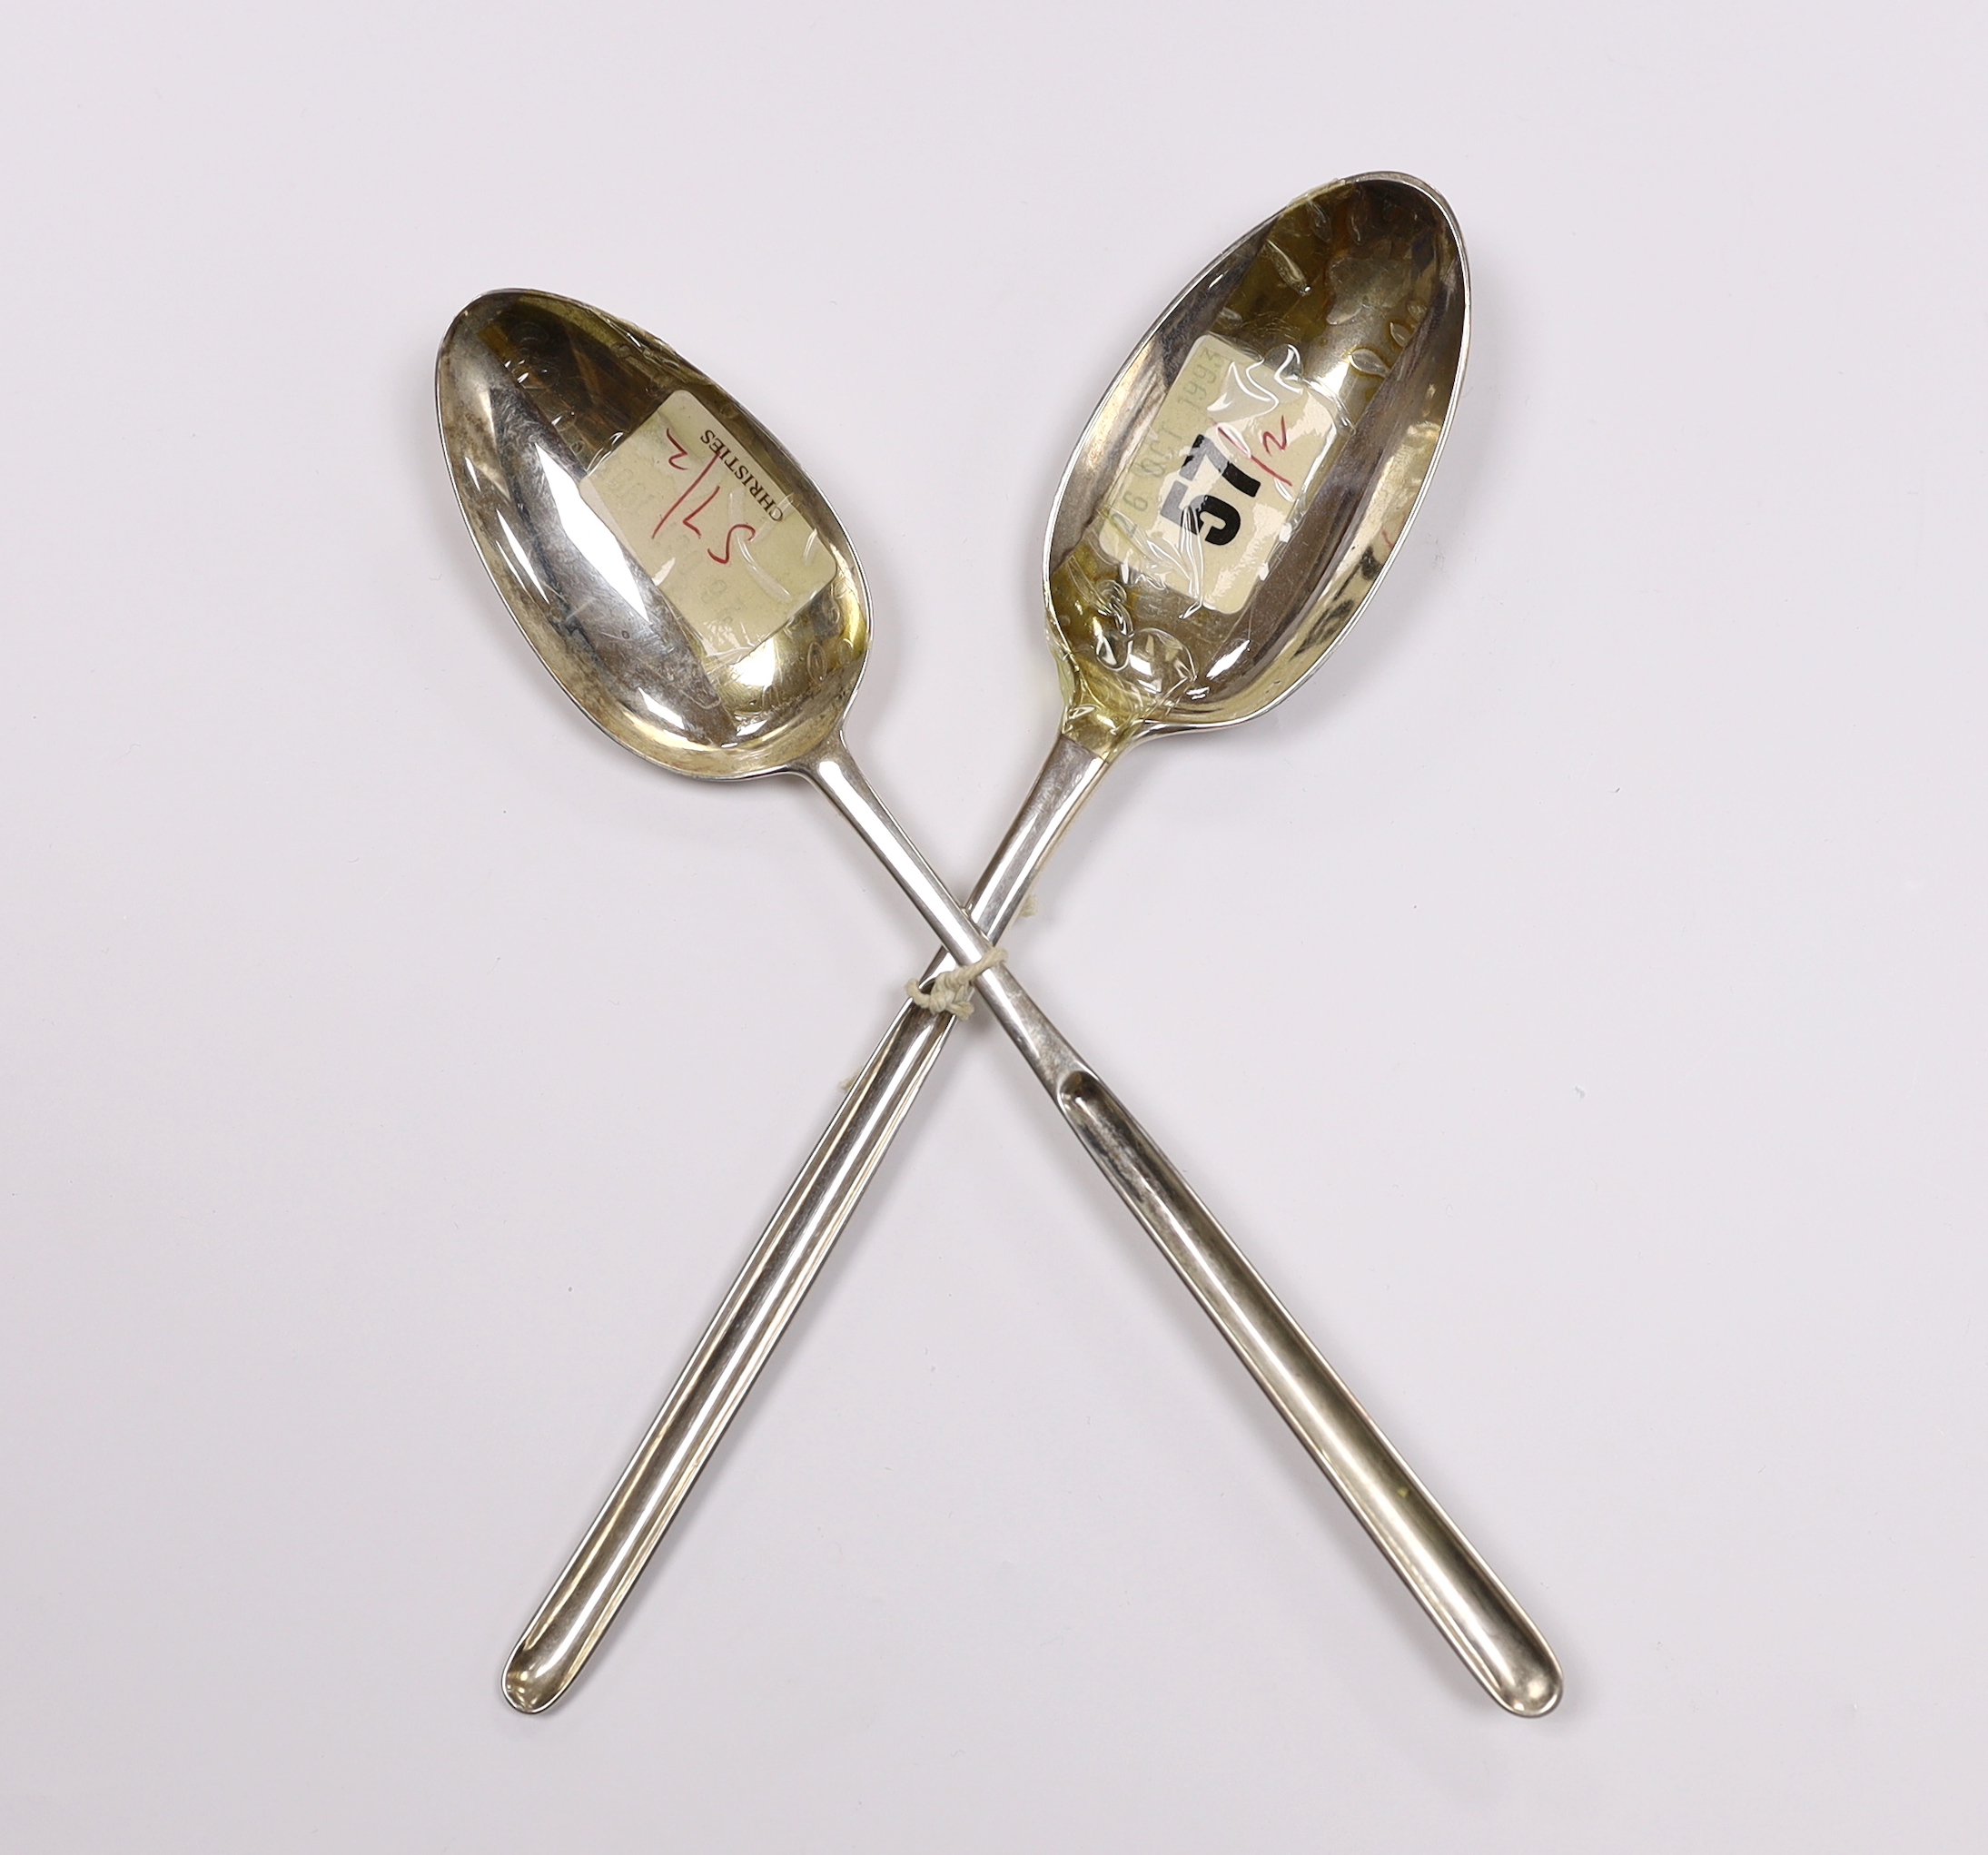 Two 18th century silver combination marrow scoop spoons, Robert Perth, London, 1750 and Stephen Adams II, London, 1790, longest 22.8cm, 89 grams.